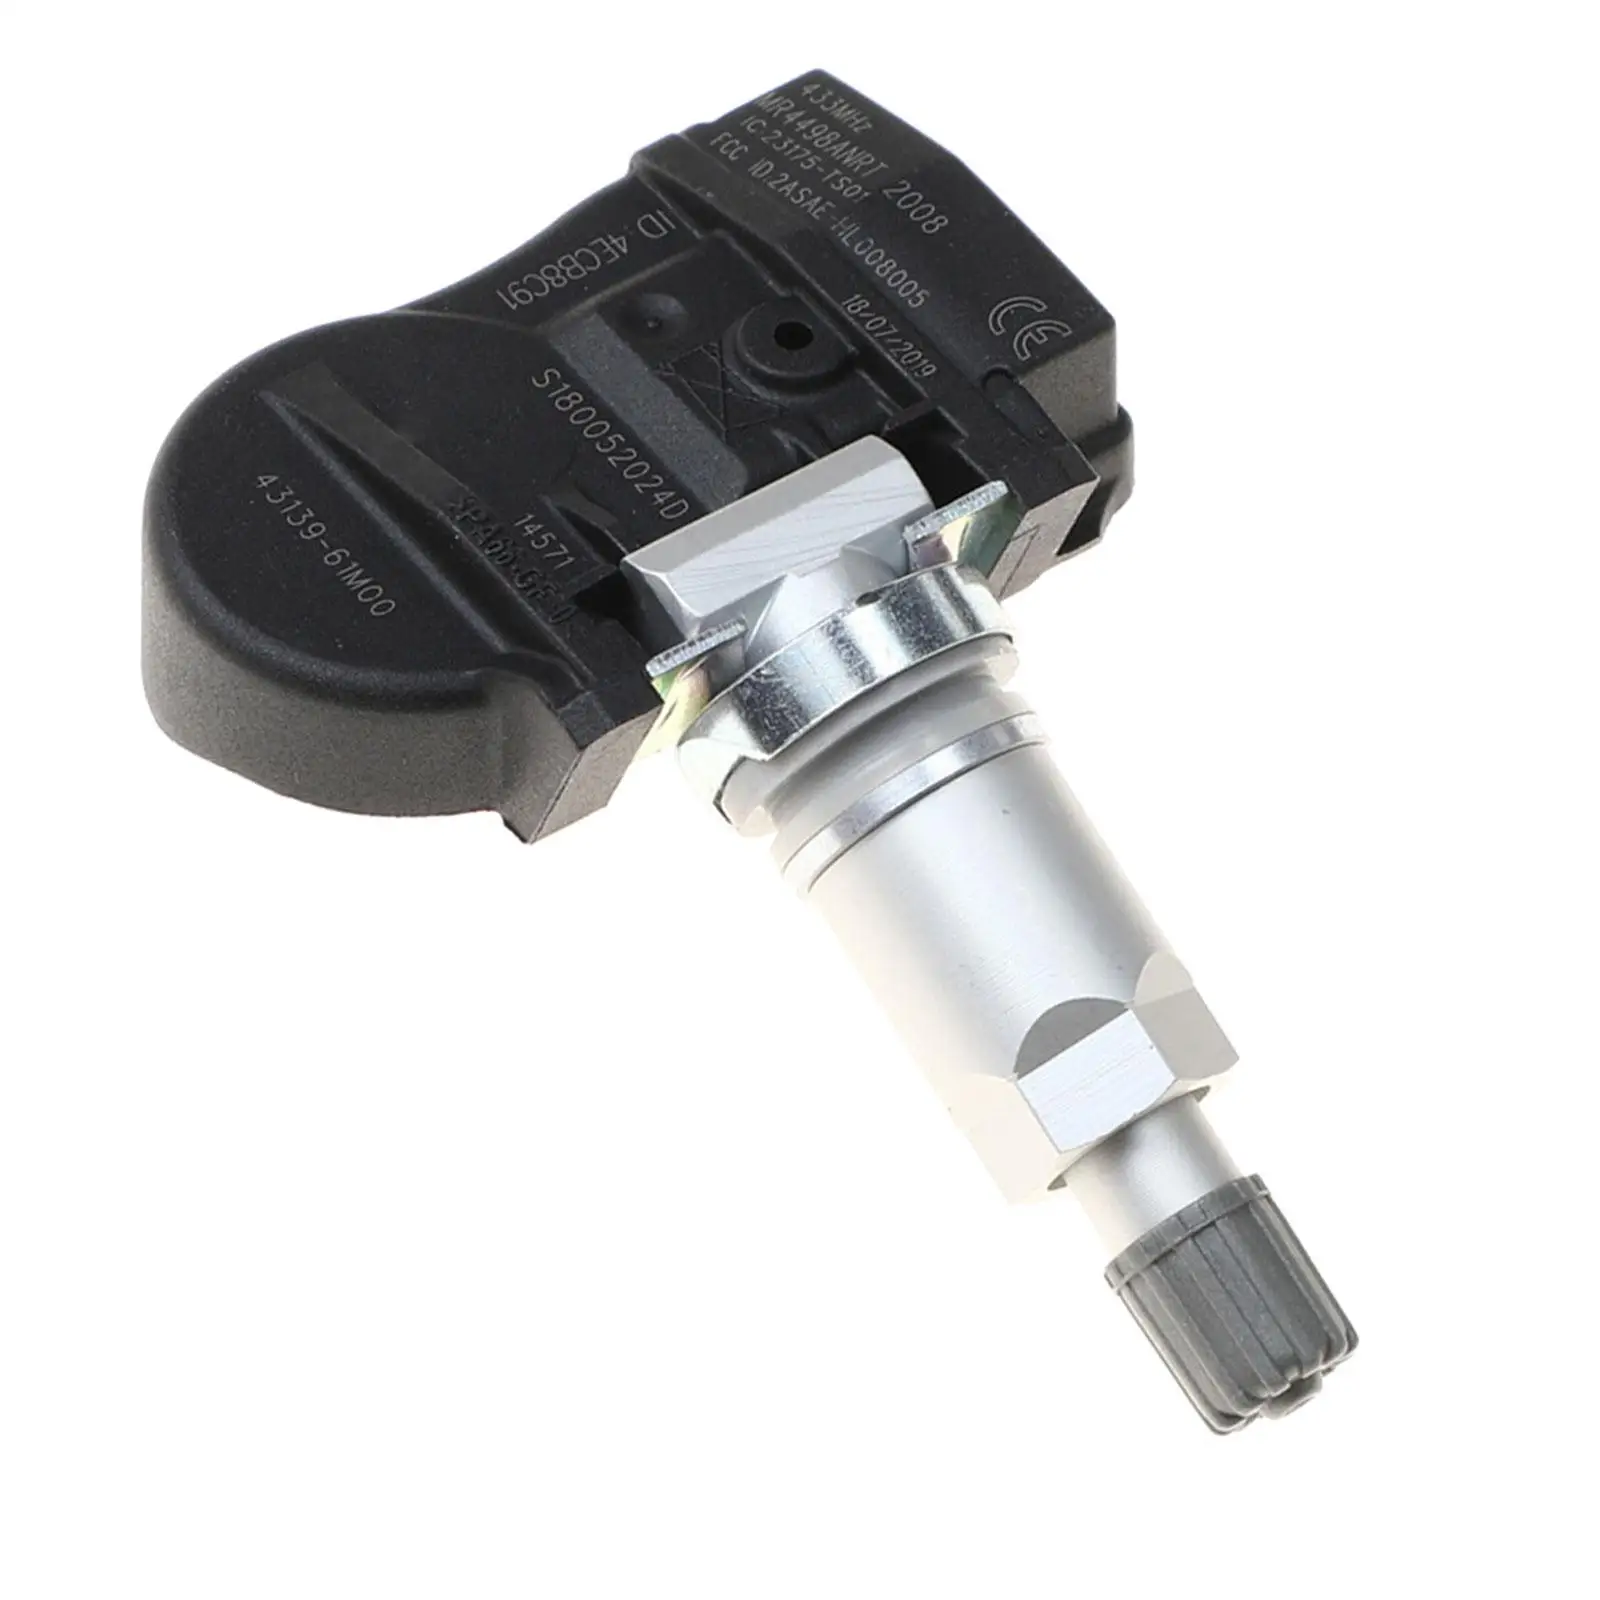 Tire Pressure Sensor Parts Replaces for Suzuki Jimmy Sport Vitara SX4 S-cross Ignis Baleno Swift Convenient Installation